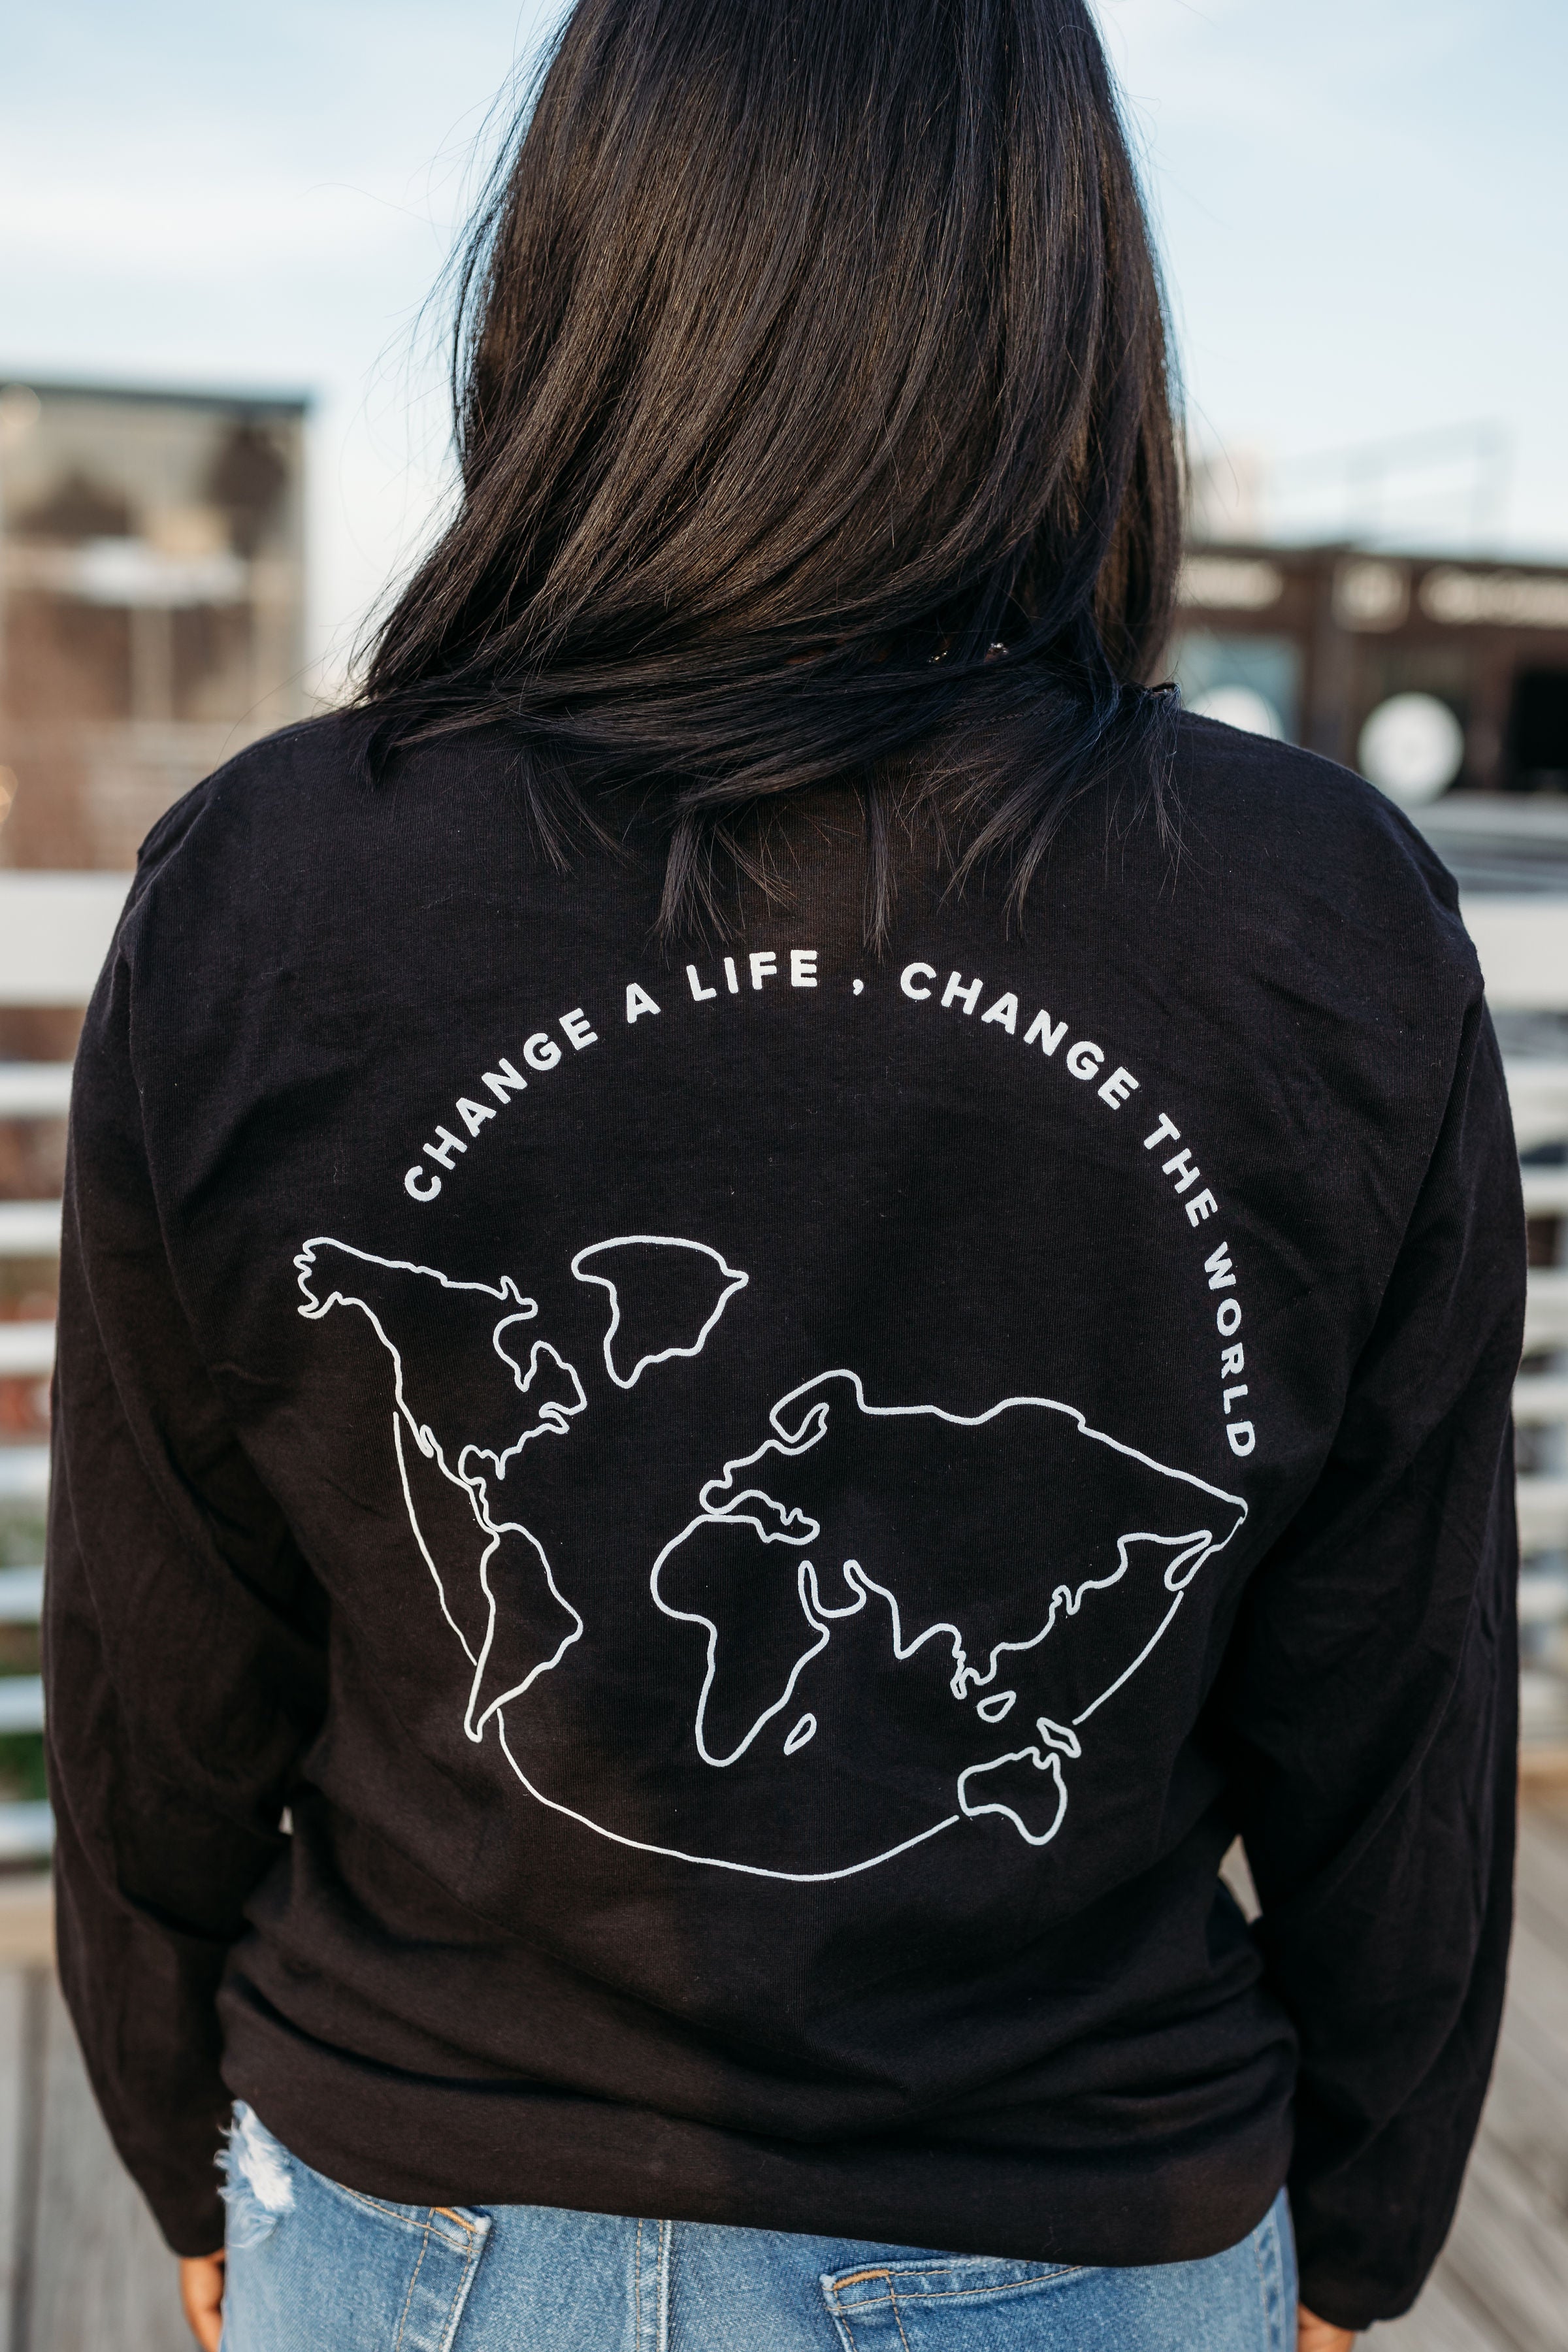 "Change a Life, Change the World" Long Sleeve Crew - Black